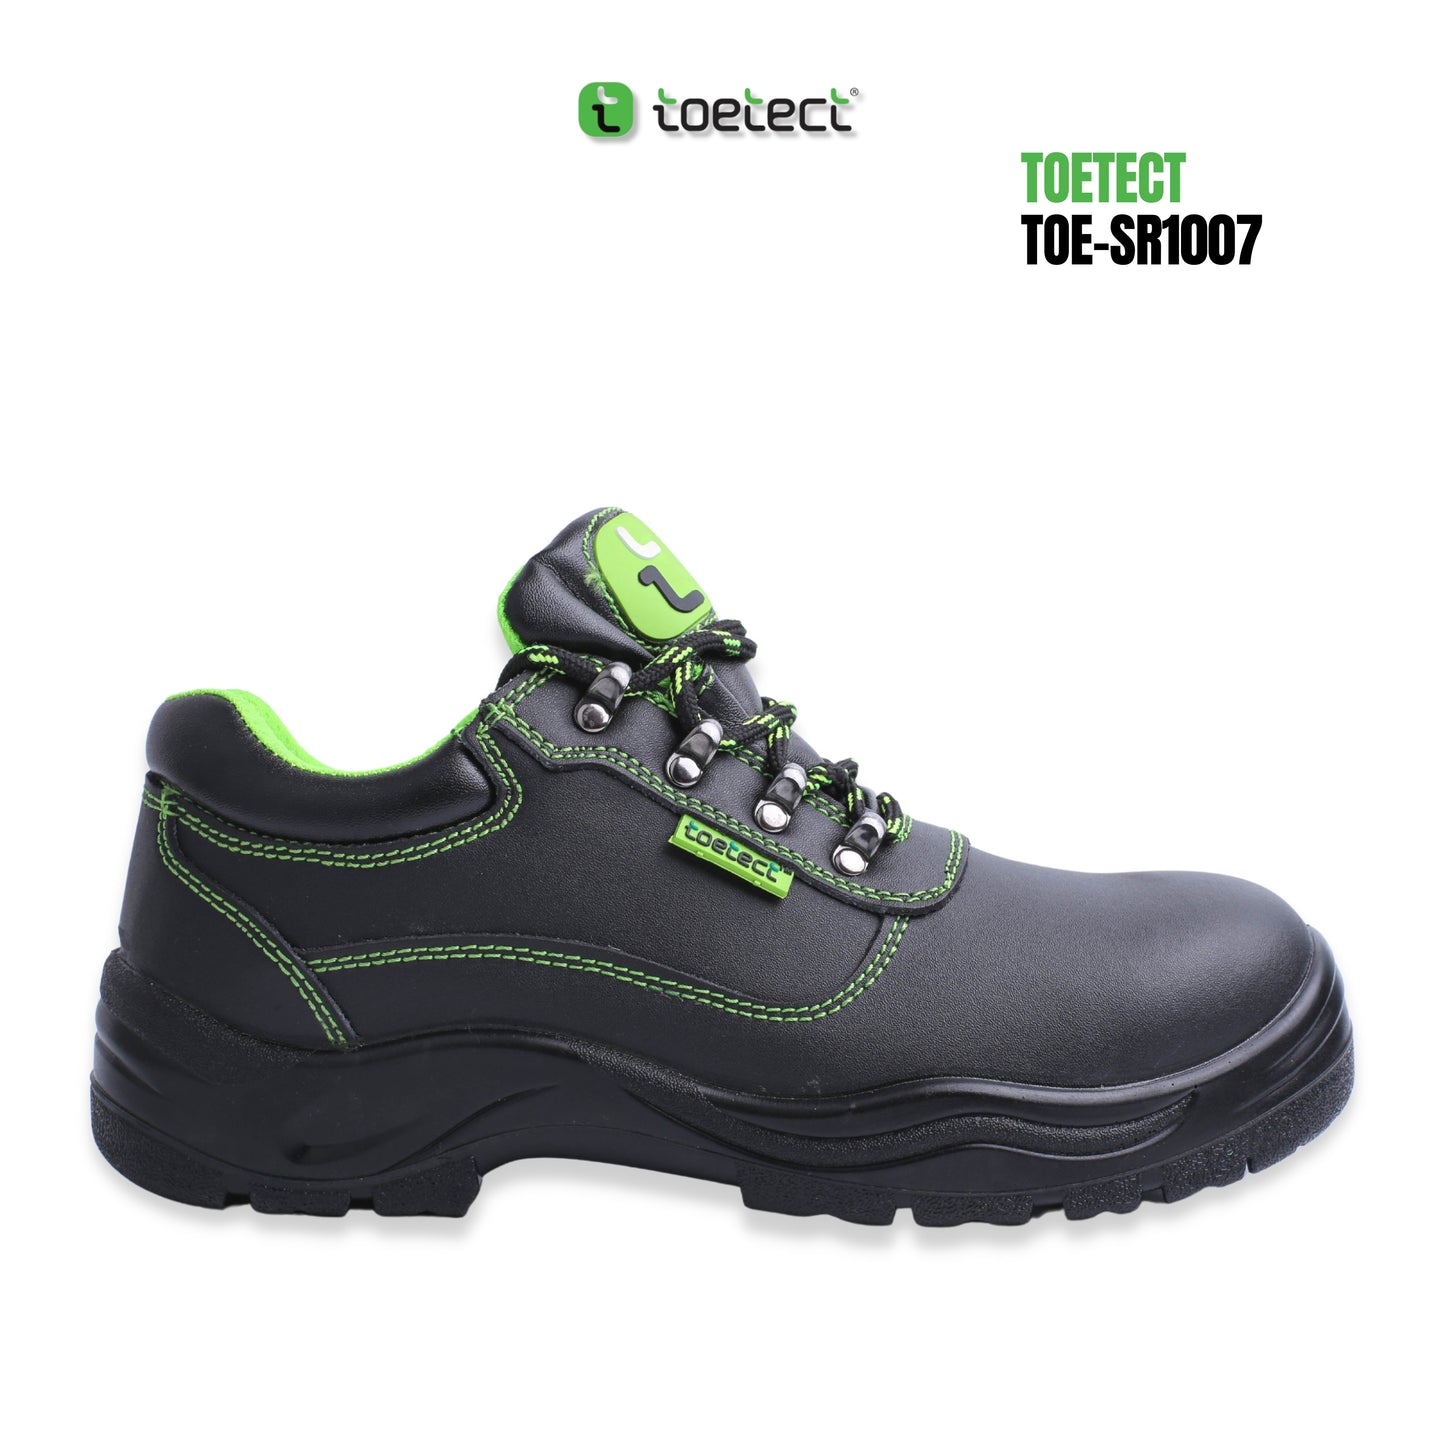 ToeTect TOE-SR1007 Men Low Cut Lace-up Safety Boots